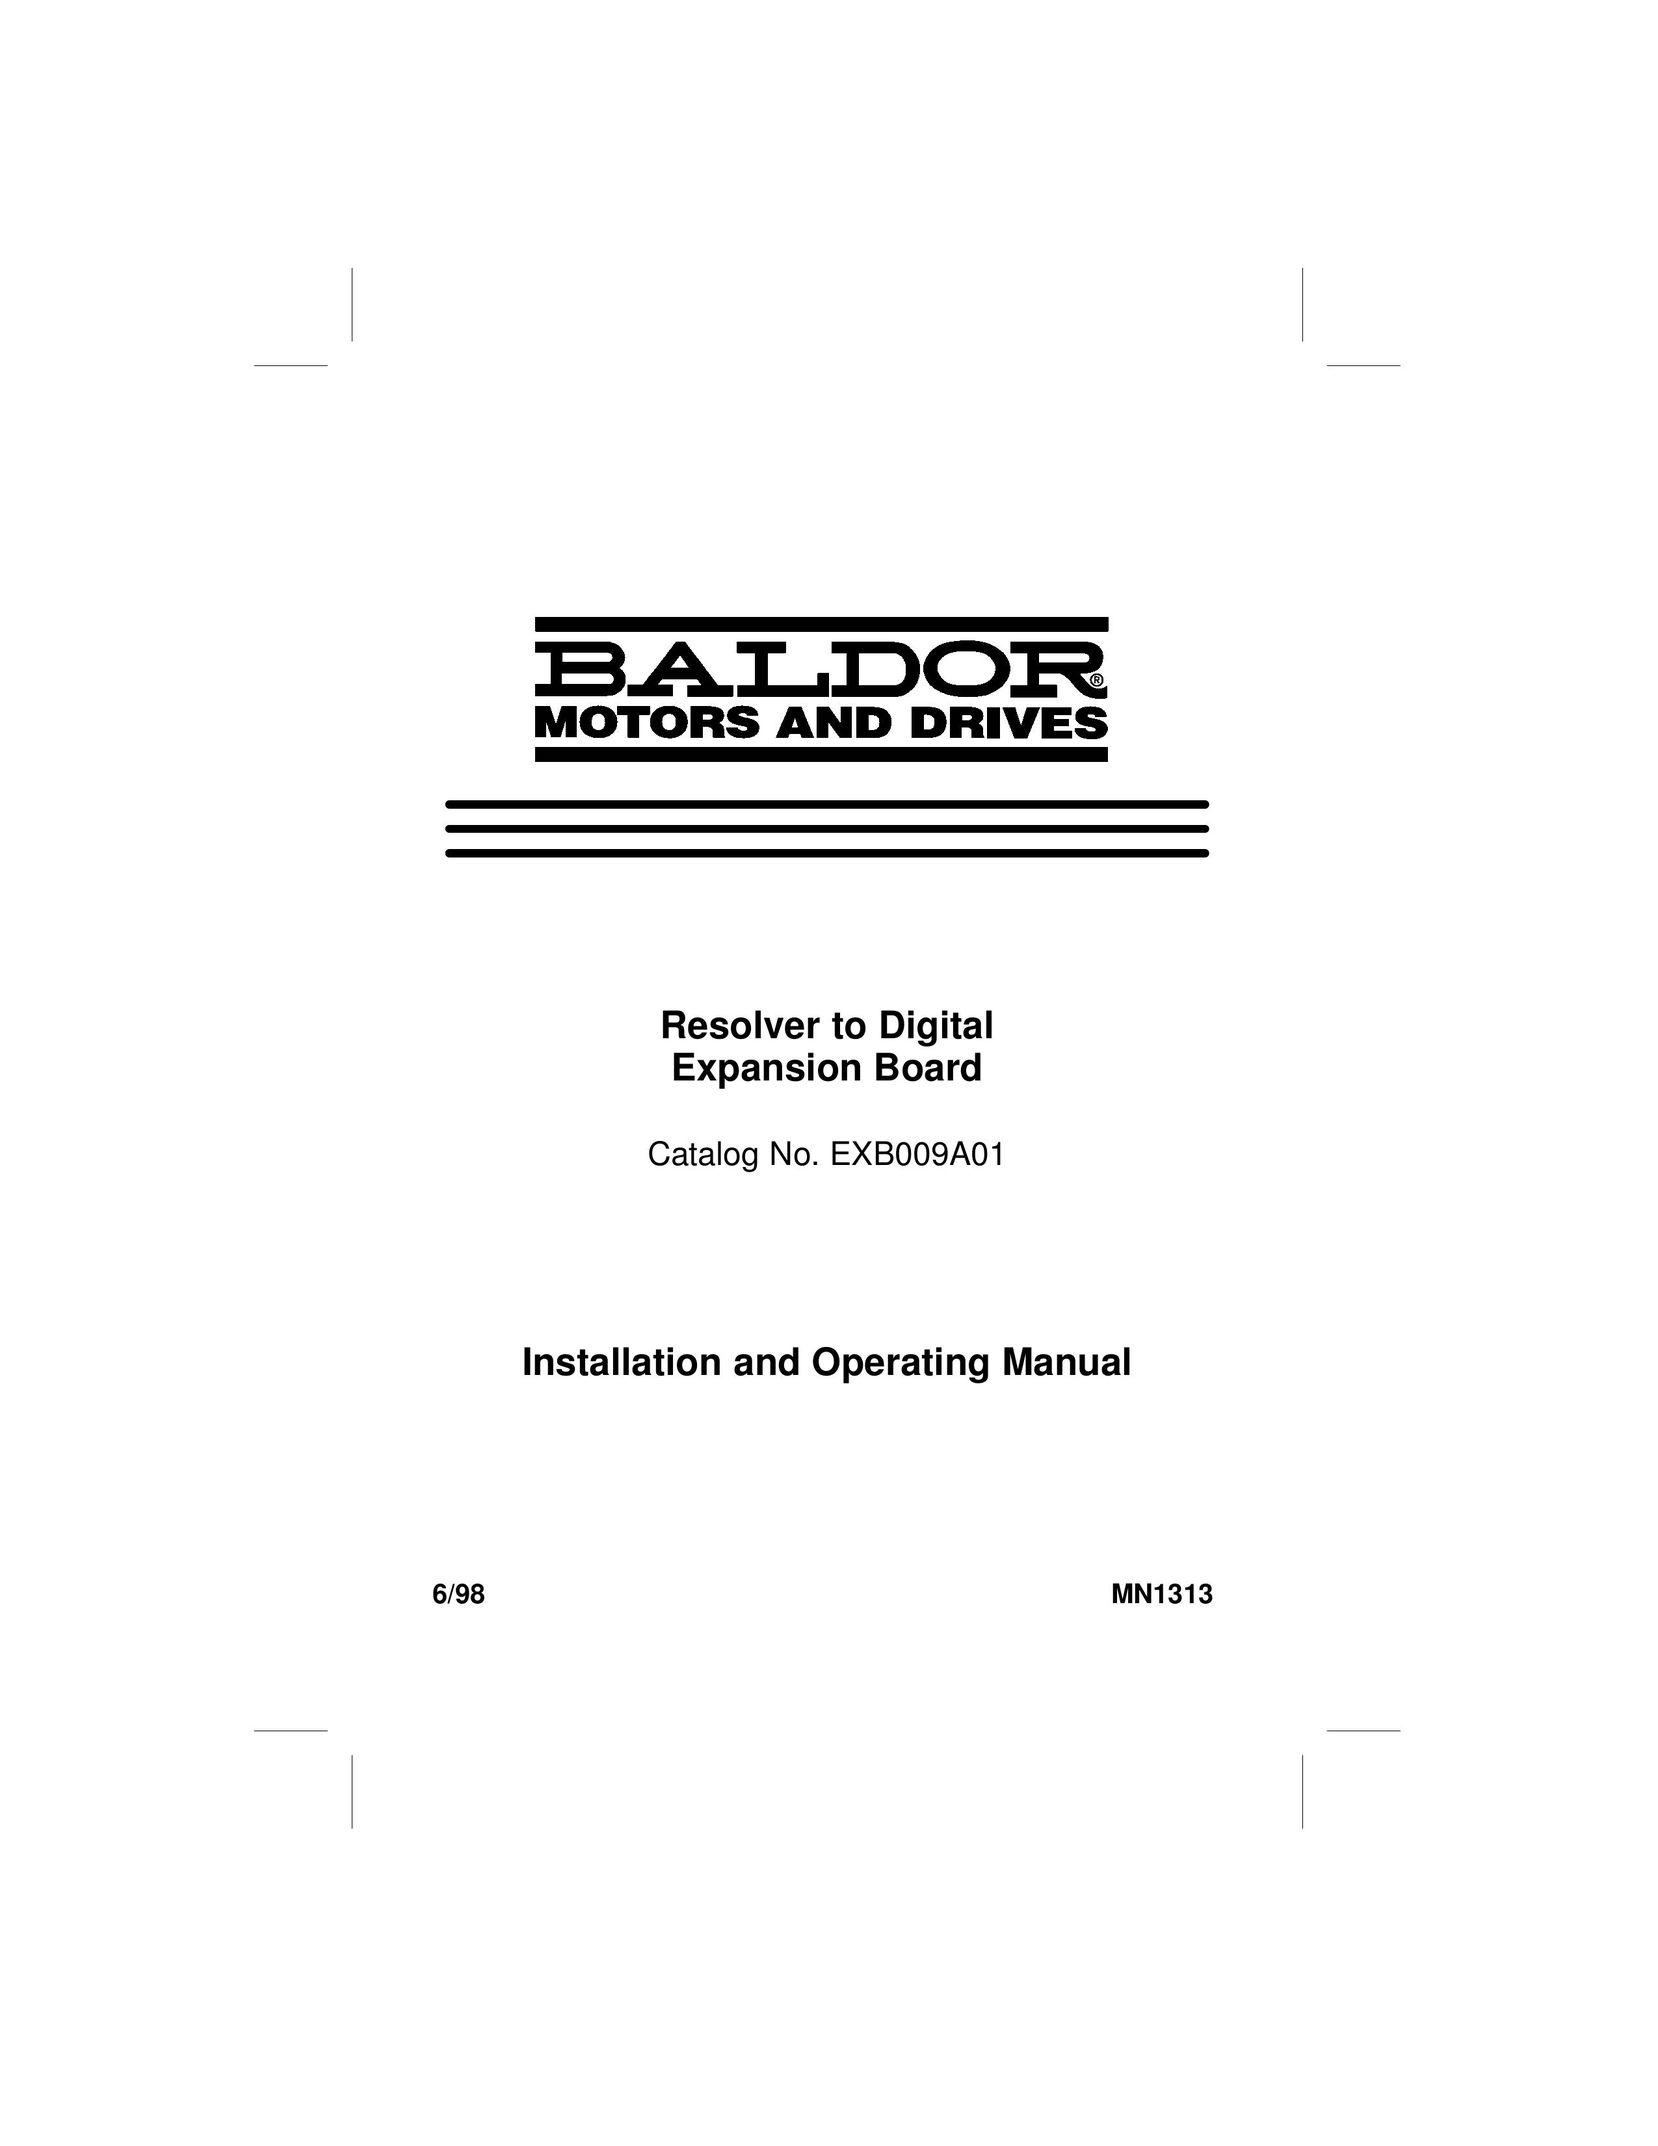 Baldor Resolver to Digital Expansion Board Computer Hardware User Manual